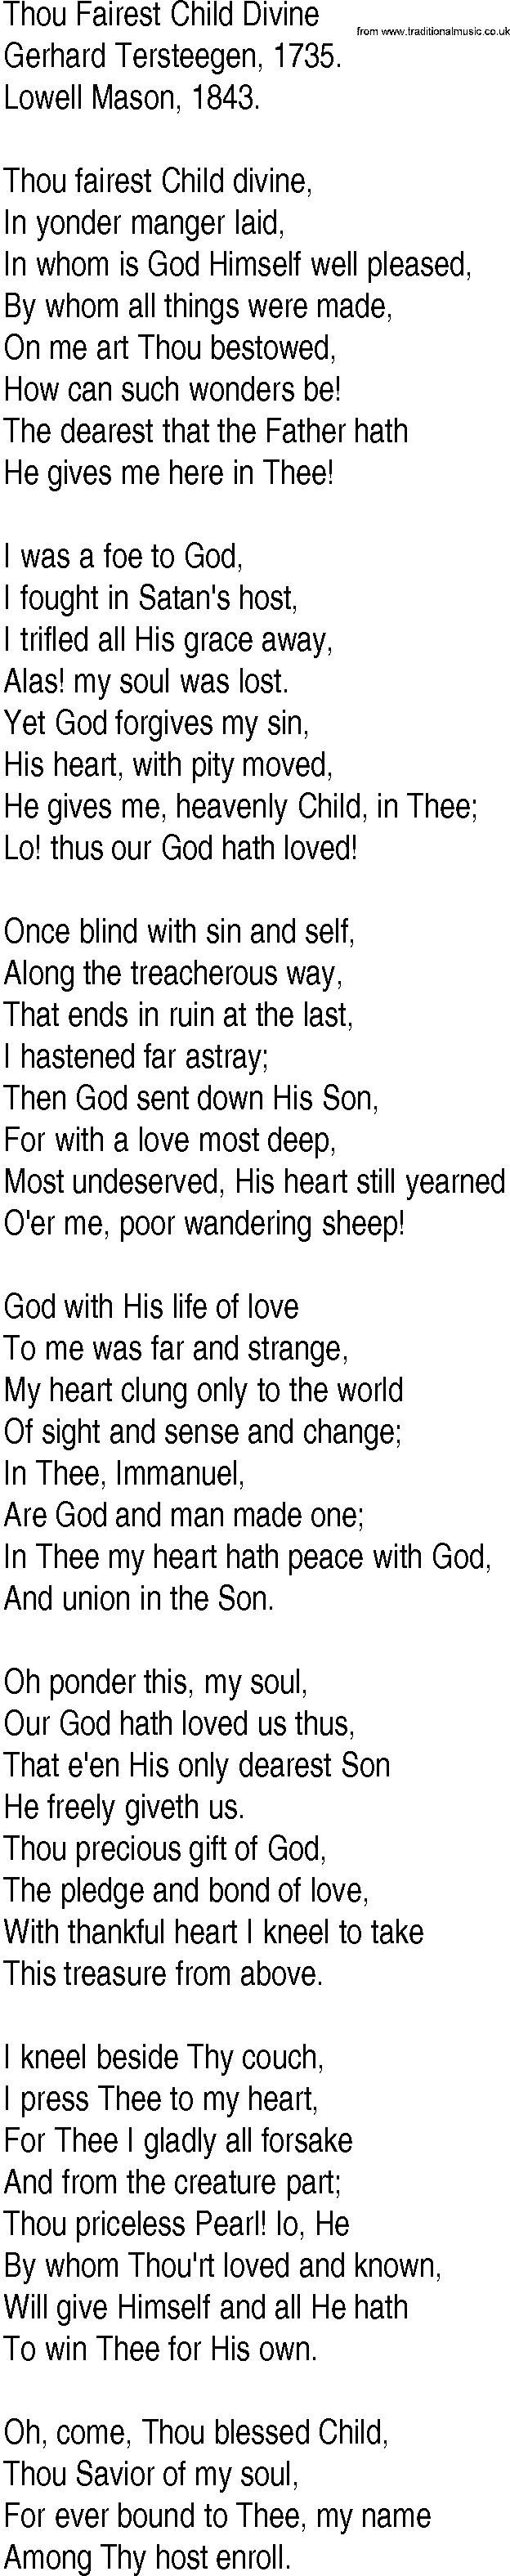 Hymn and Gospel Song: Thou Fairest Child Divine by Gerhard Tersteegen lyrics